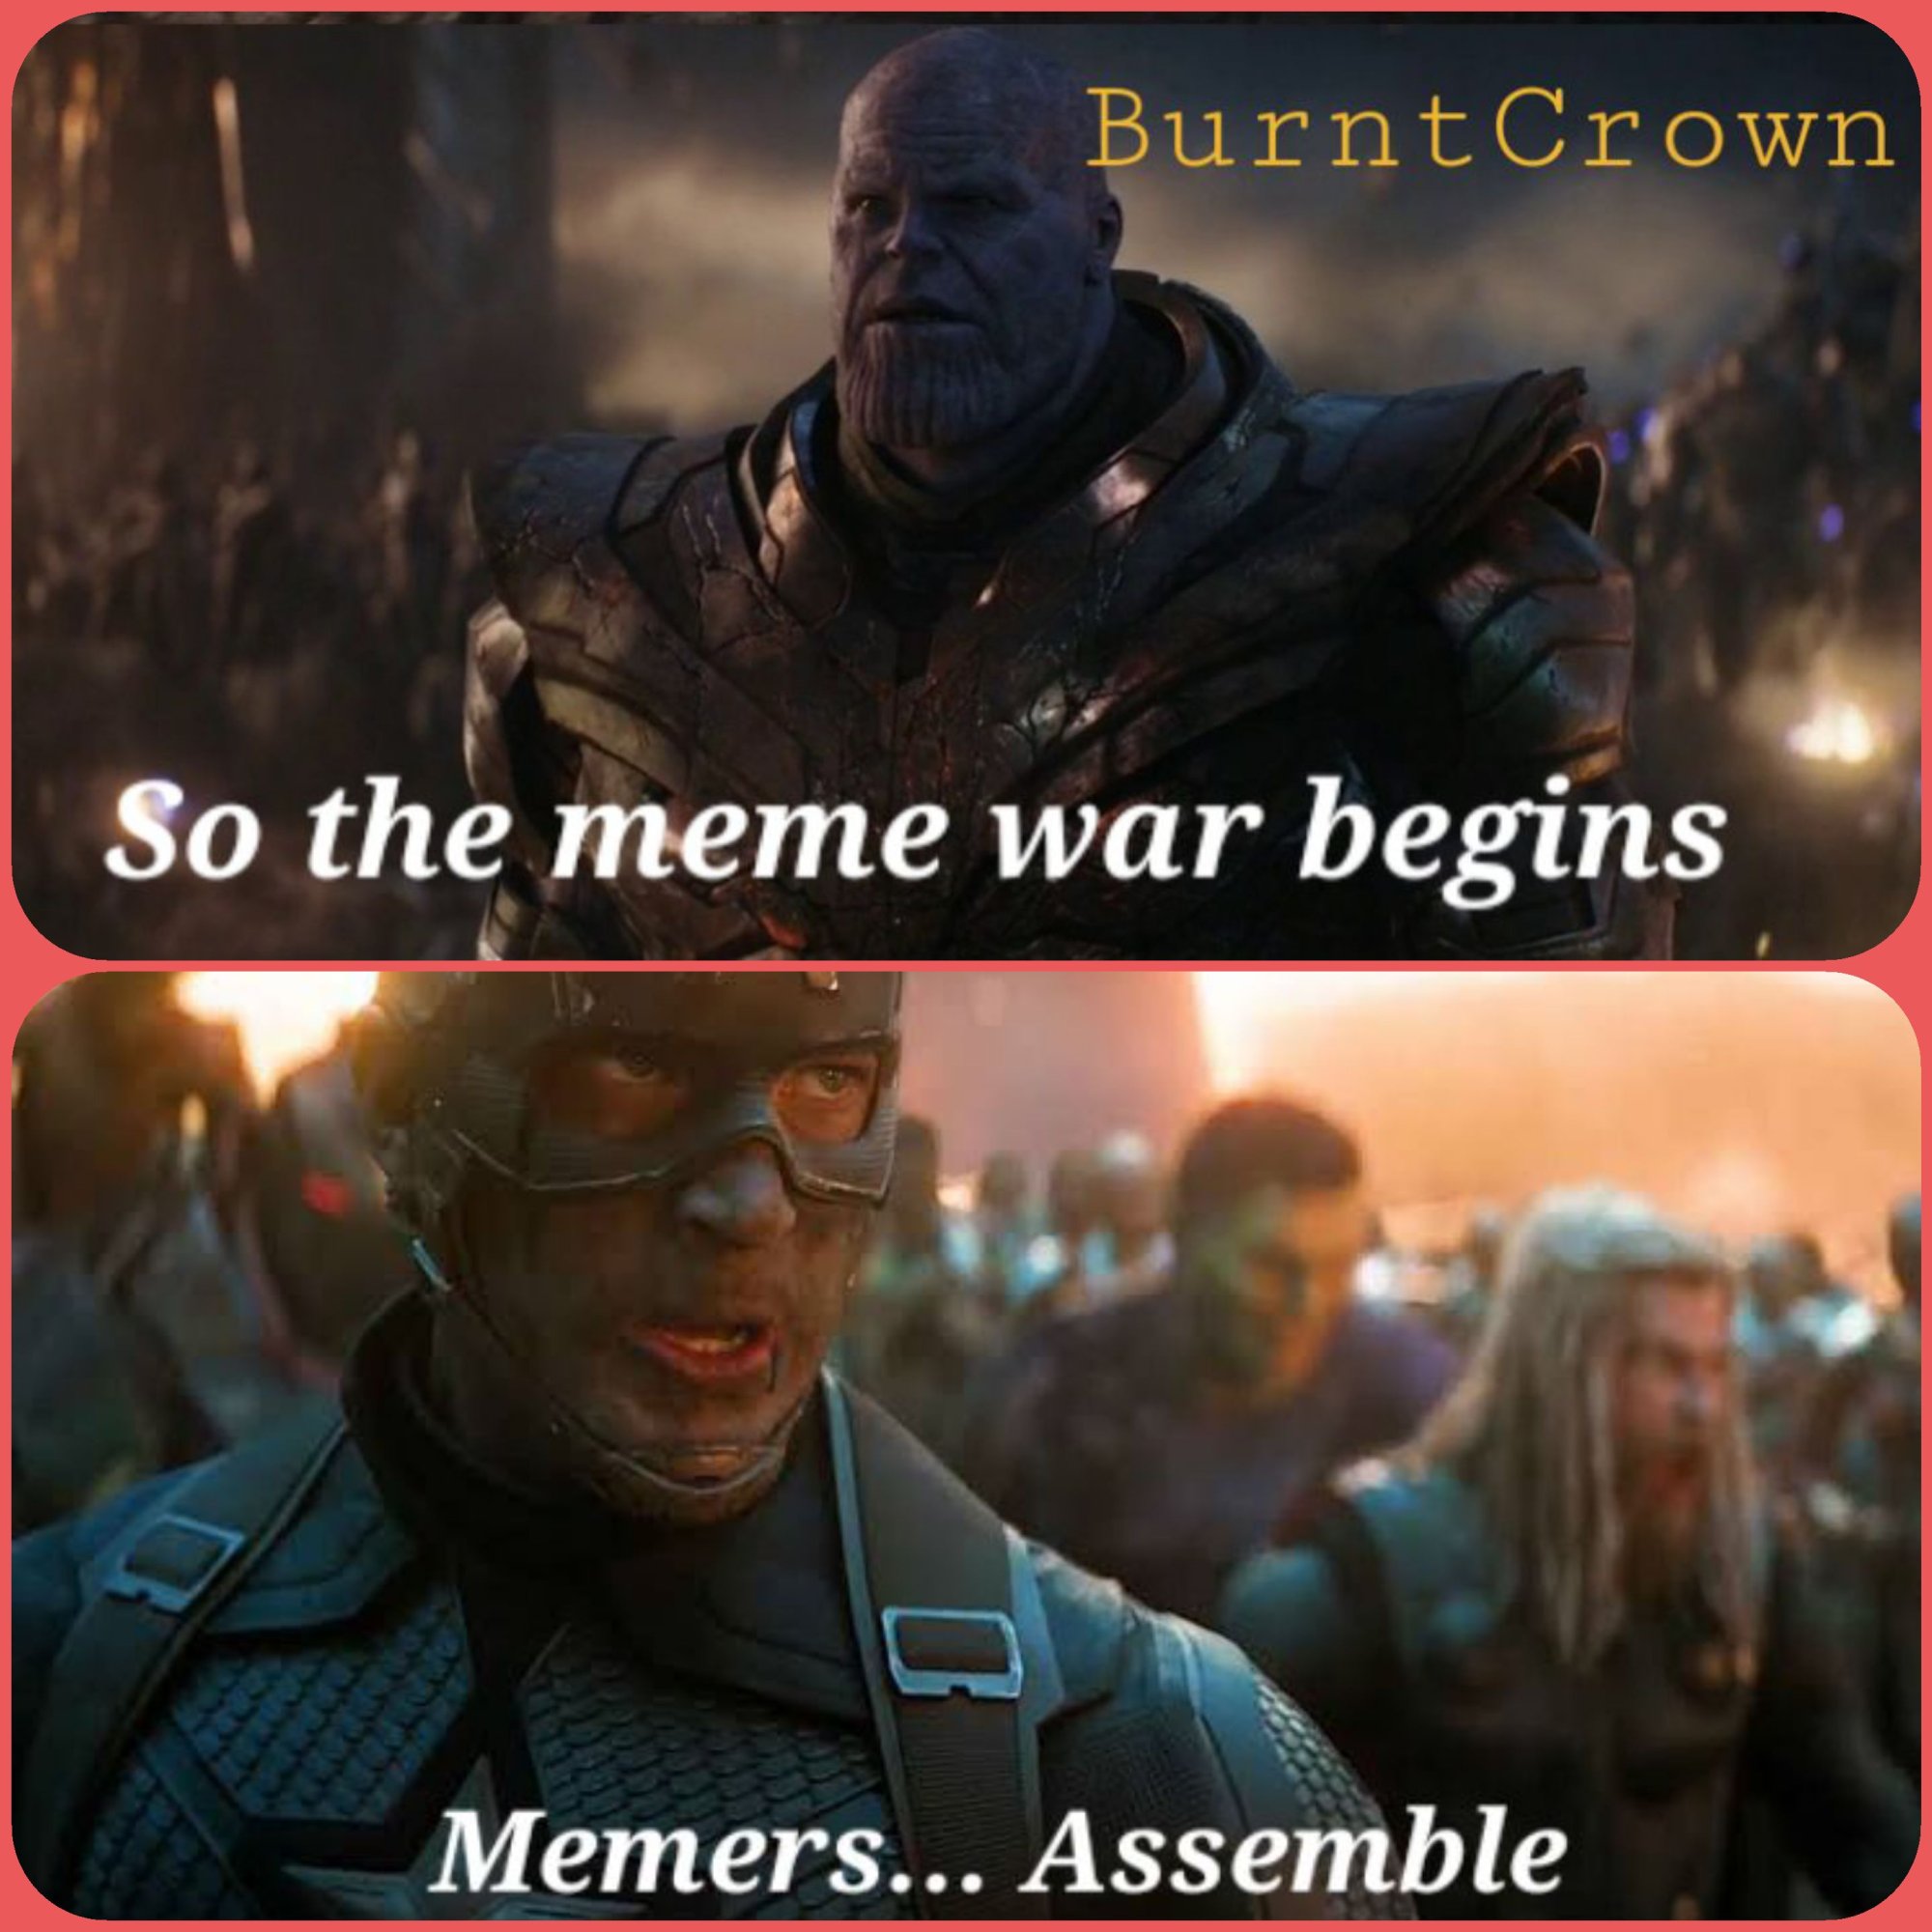 Memers... Assemble. The khco - BurntCrown meme war is upon us.